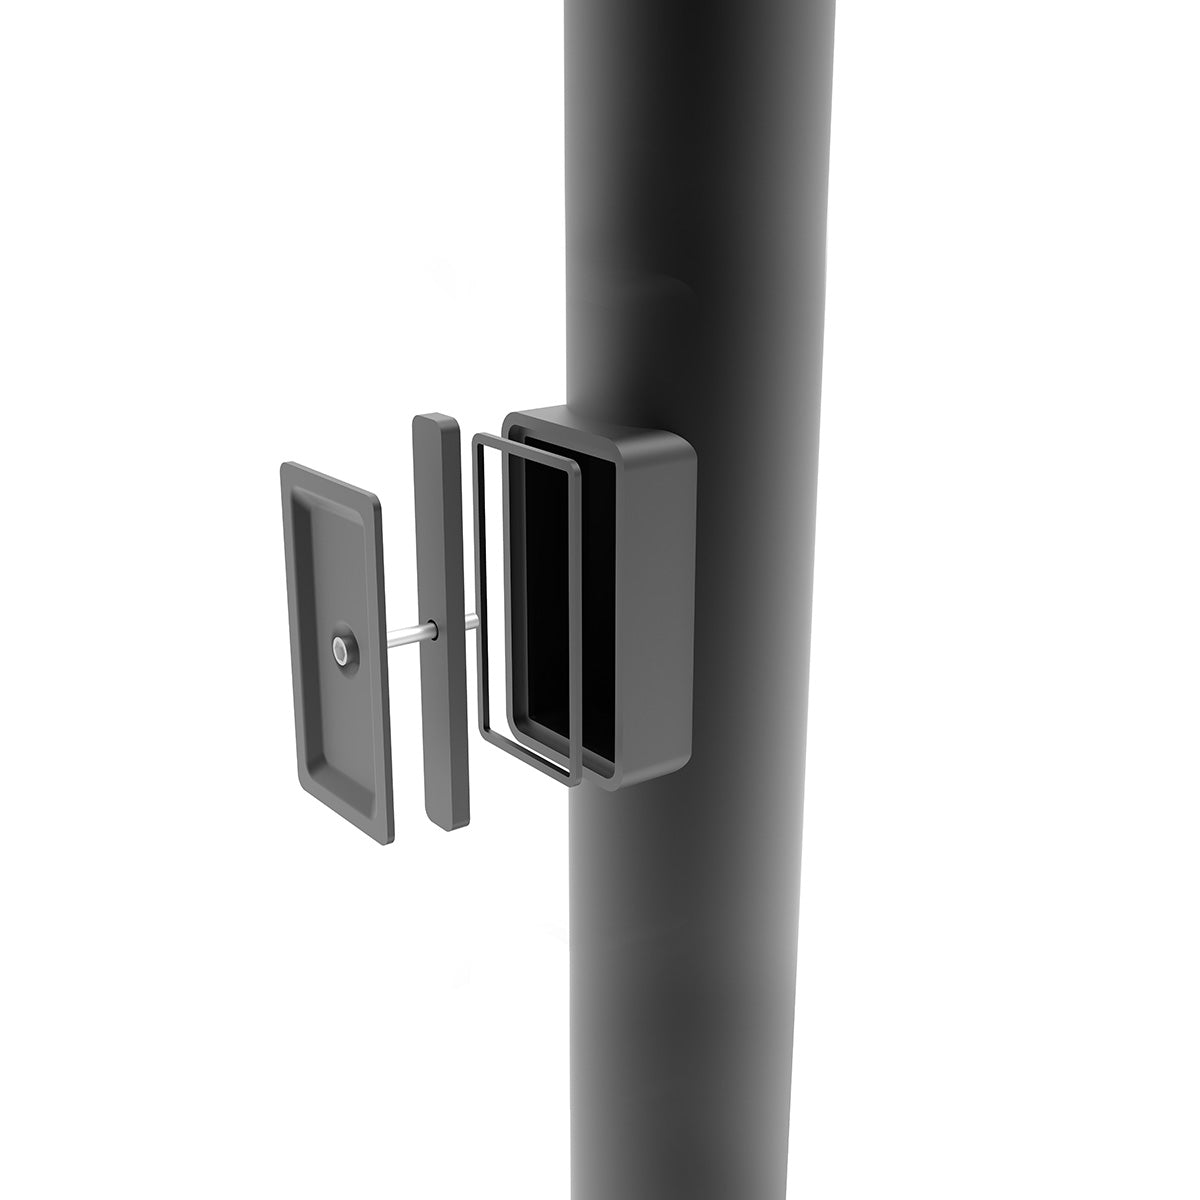 Round Steel Light Pole - 4"